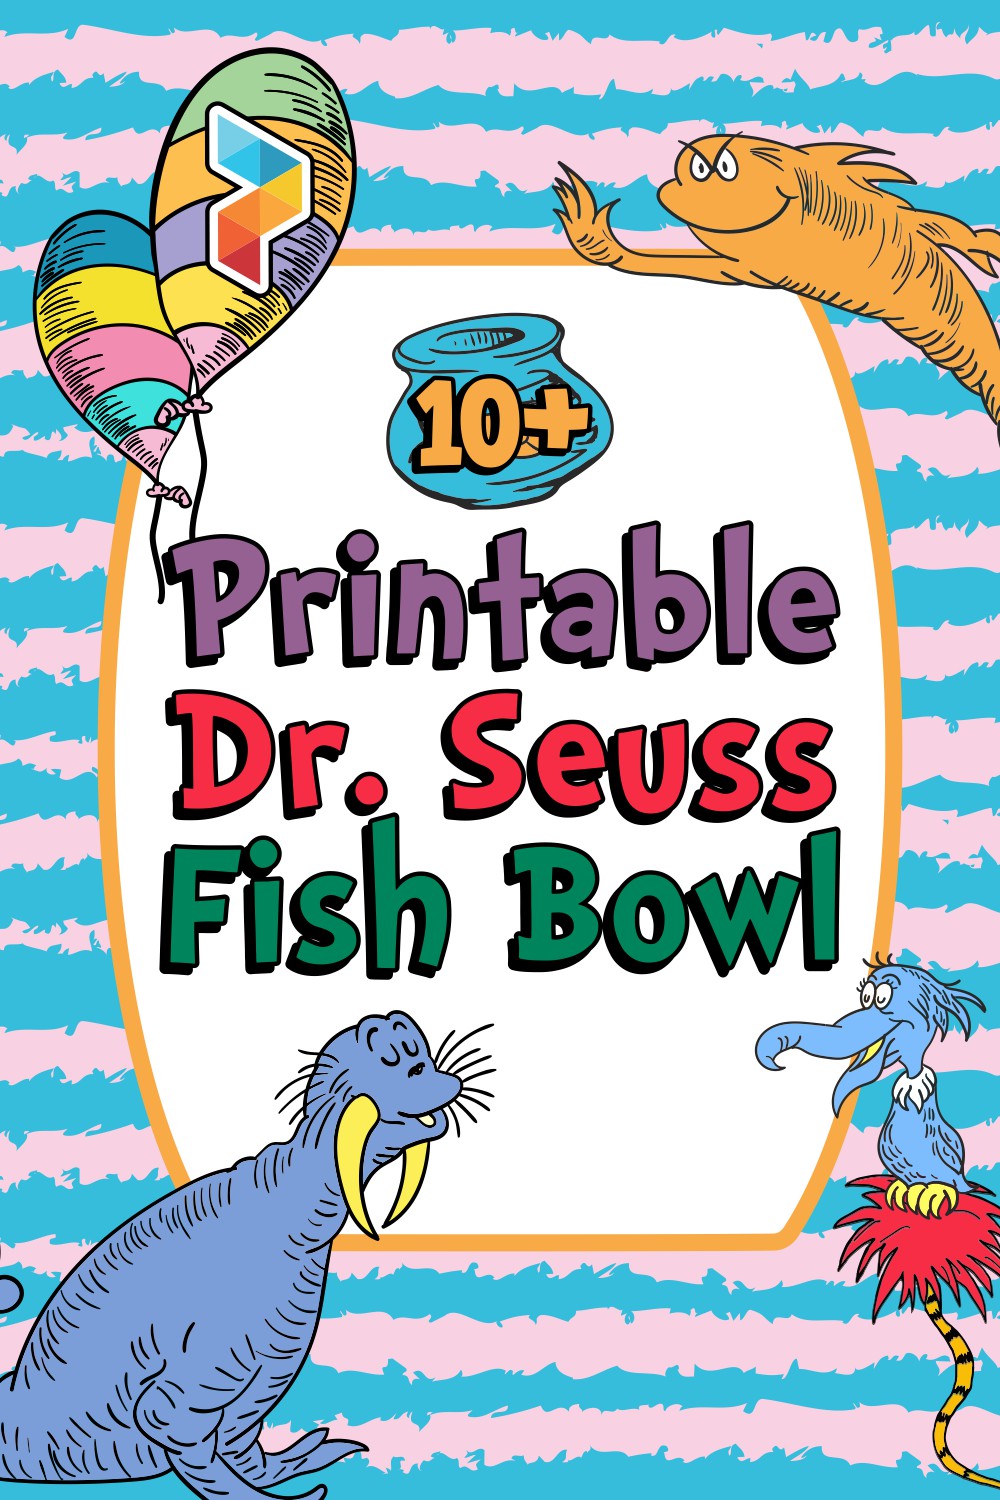 Dr. Seuss Fish Bowl